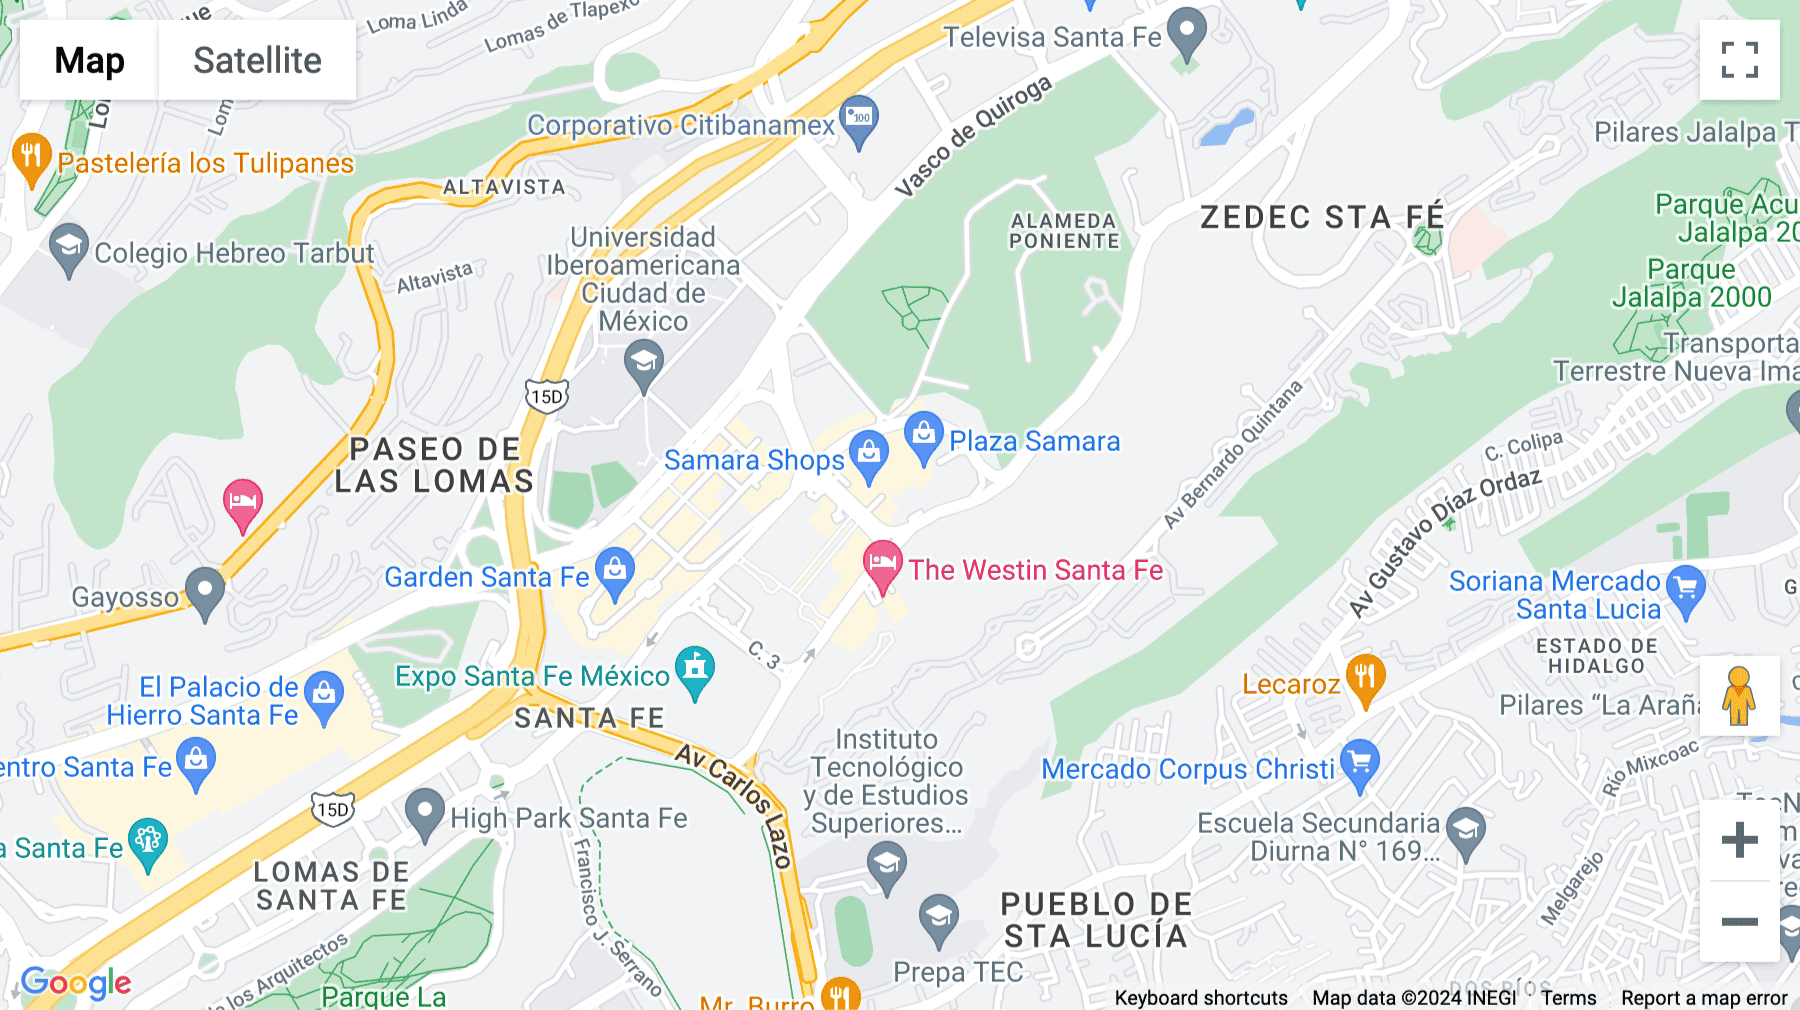 Click for interative map of Tower Park Plaza, Avenida Javier Barros Sierra 495, Santa Fe, Mexico City